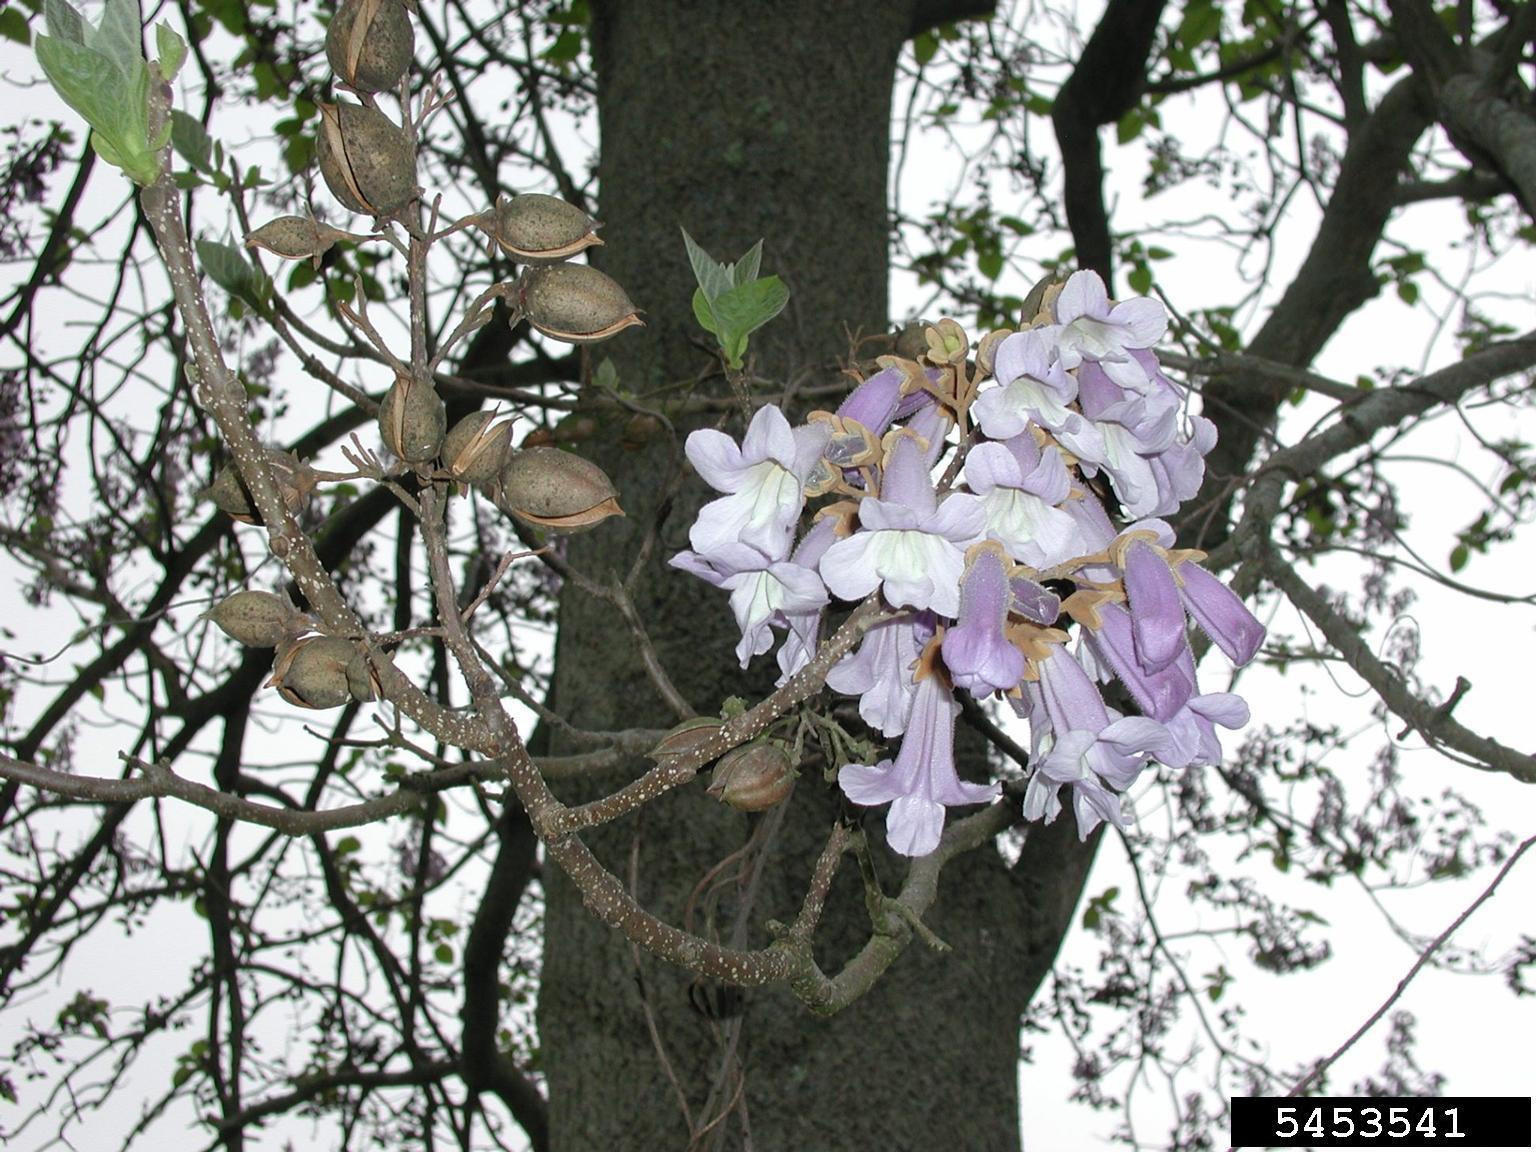 invasive paulownia tomentosa tree with lavender flowers